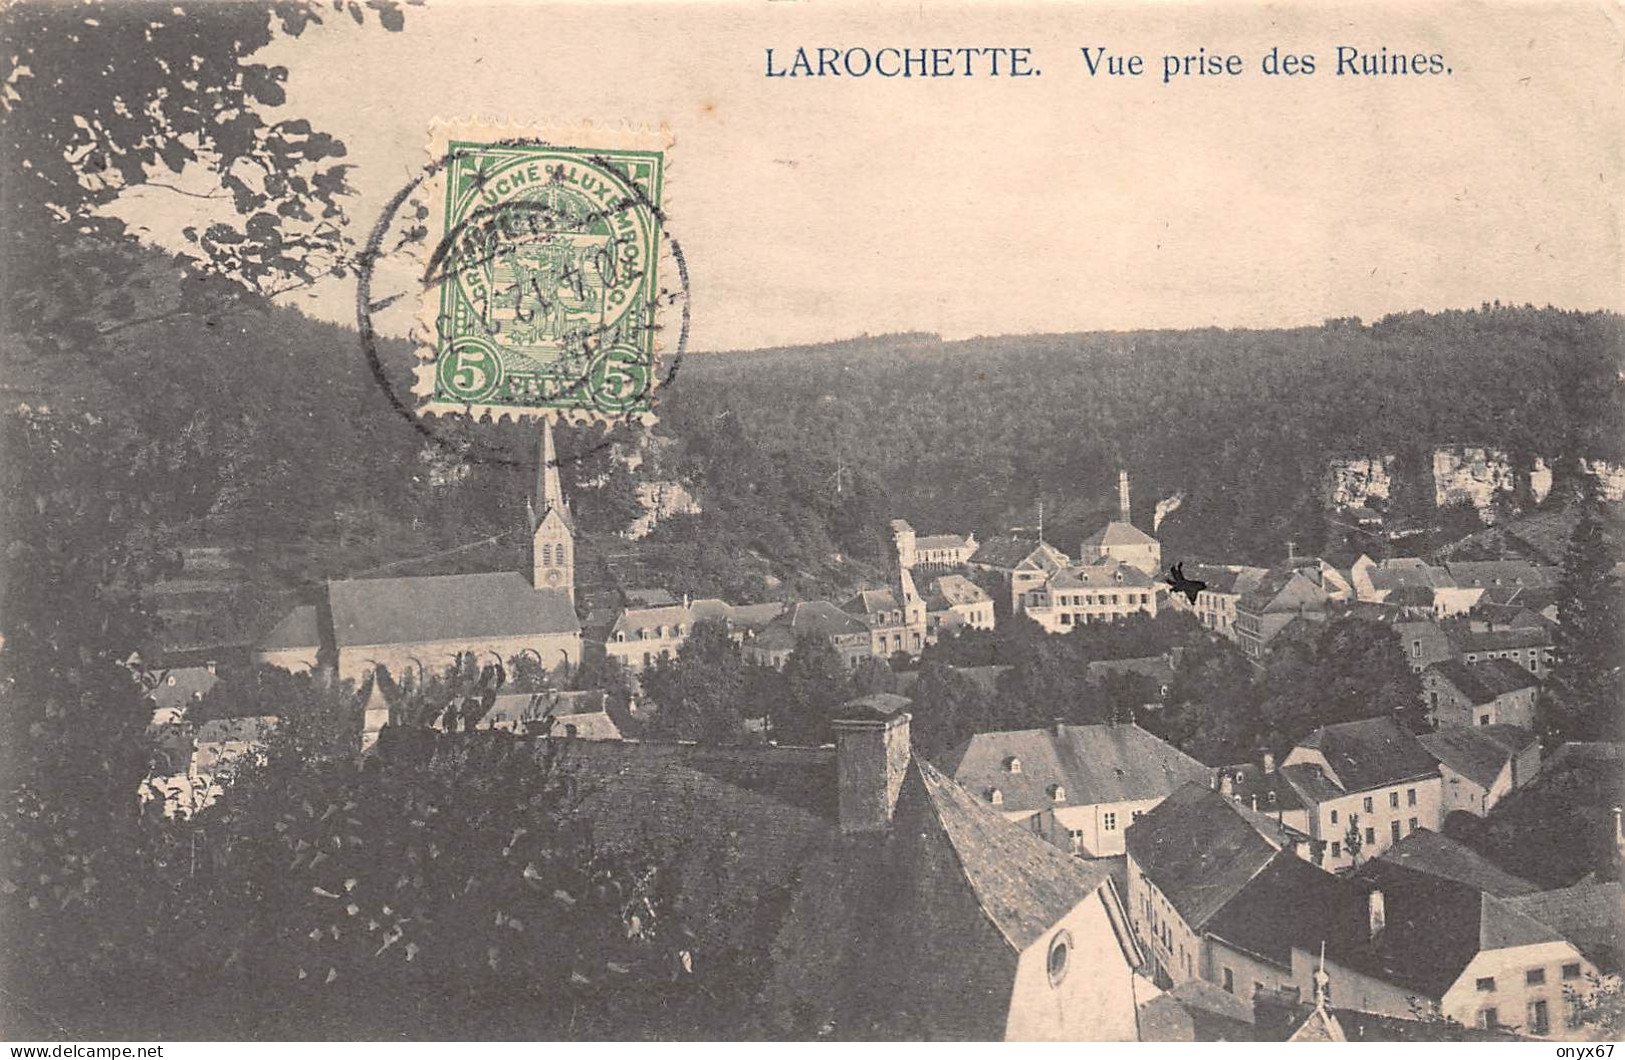 LAROCHETTE-Fiels-Fels-Mersch-Luxembourg-Lëtzebuerg-Luxemburg-Vue Prise Des Ruines-Editeur Schumacher, Mondorf-les-Bains - Larochette